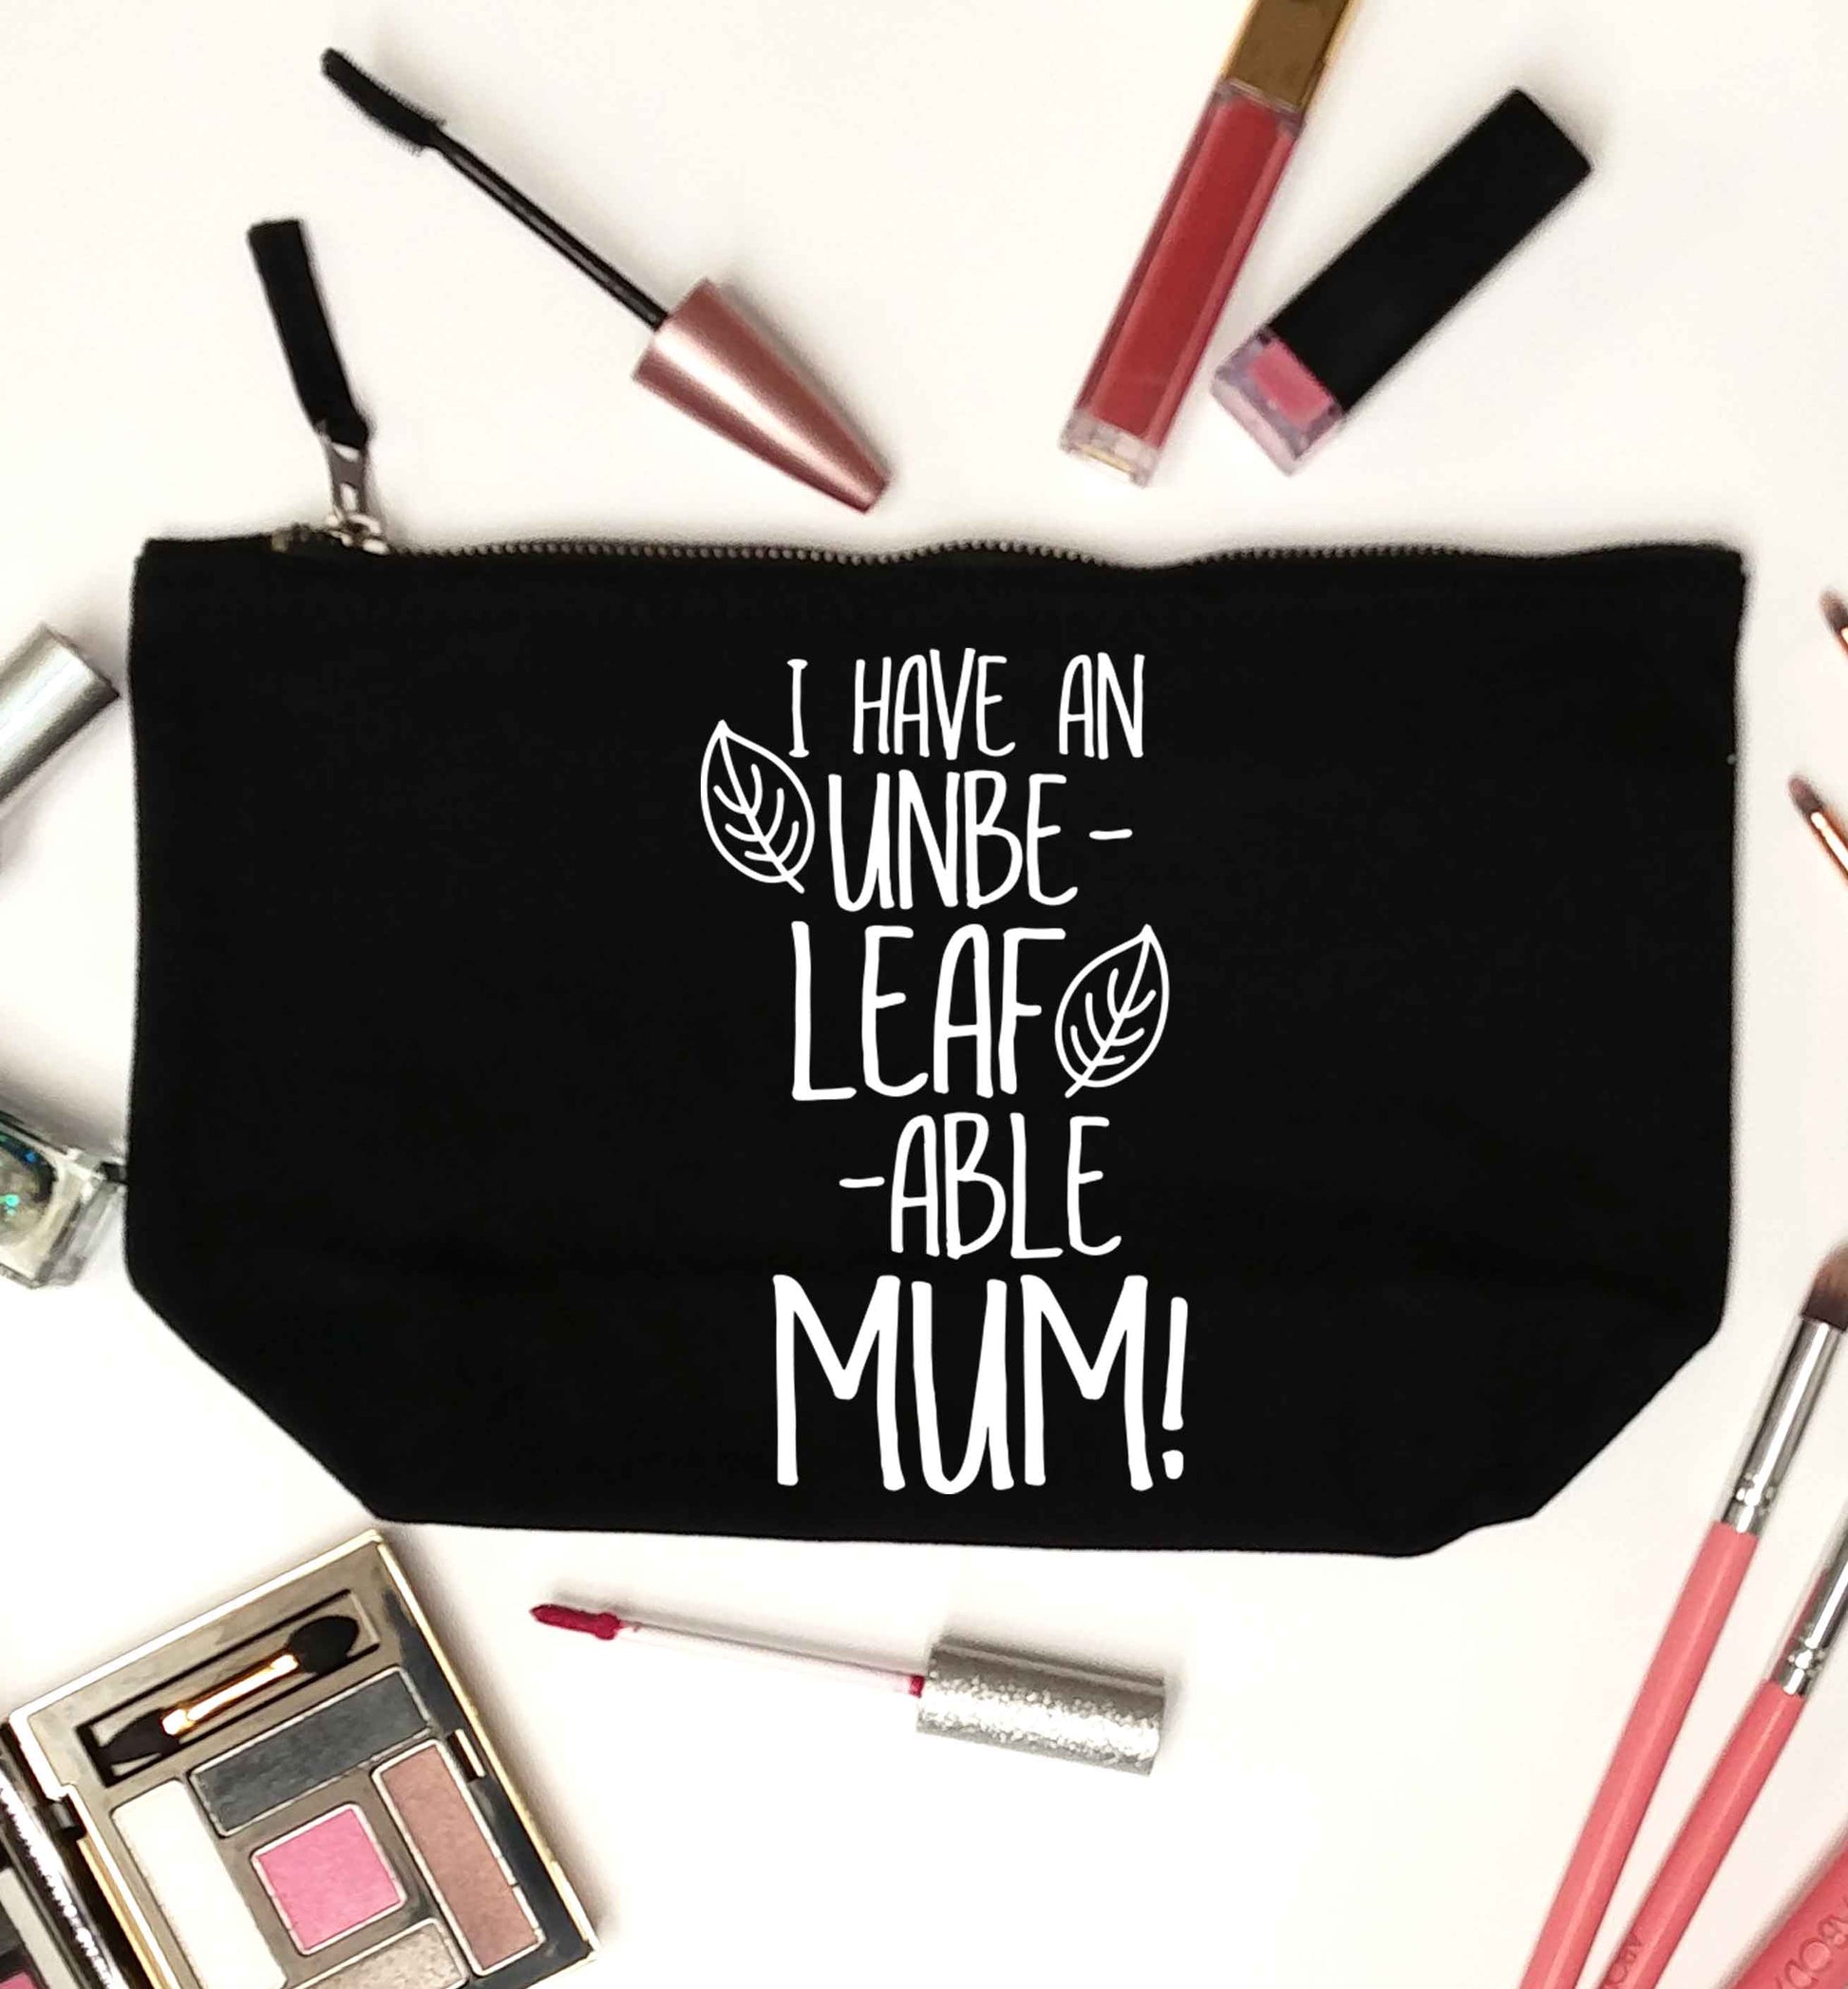 I have an unbeleafable mum! black makeup bag